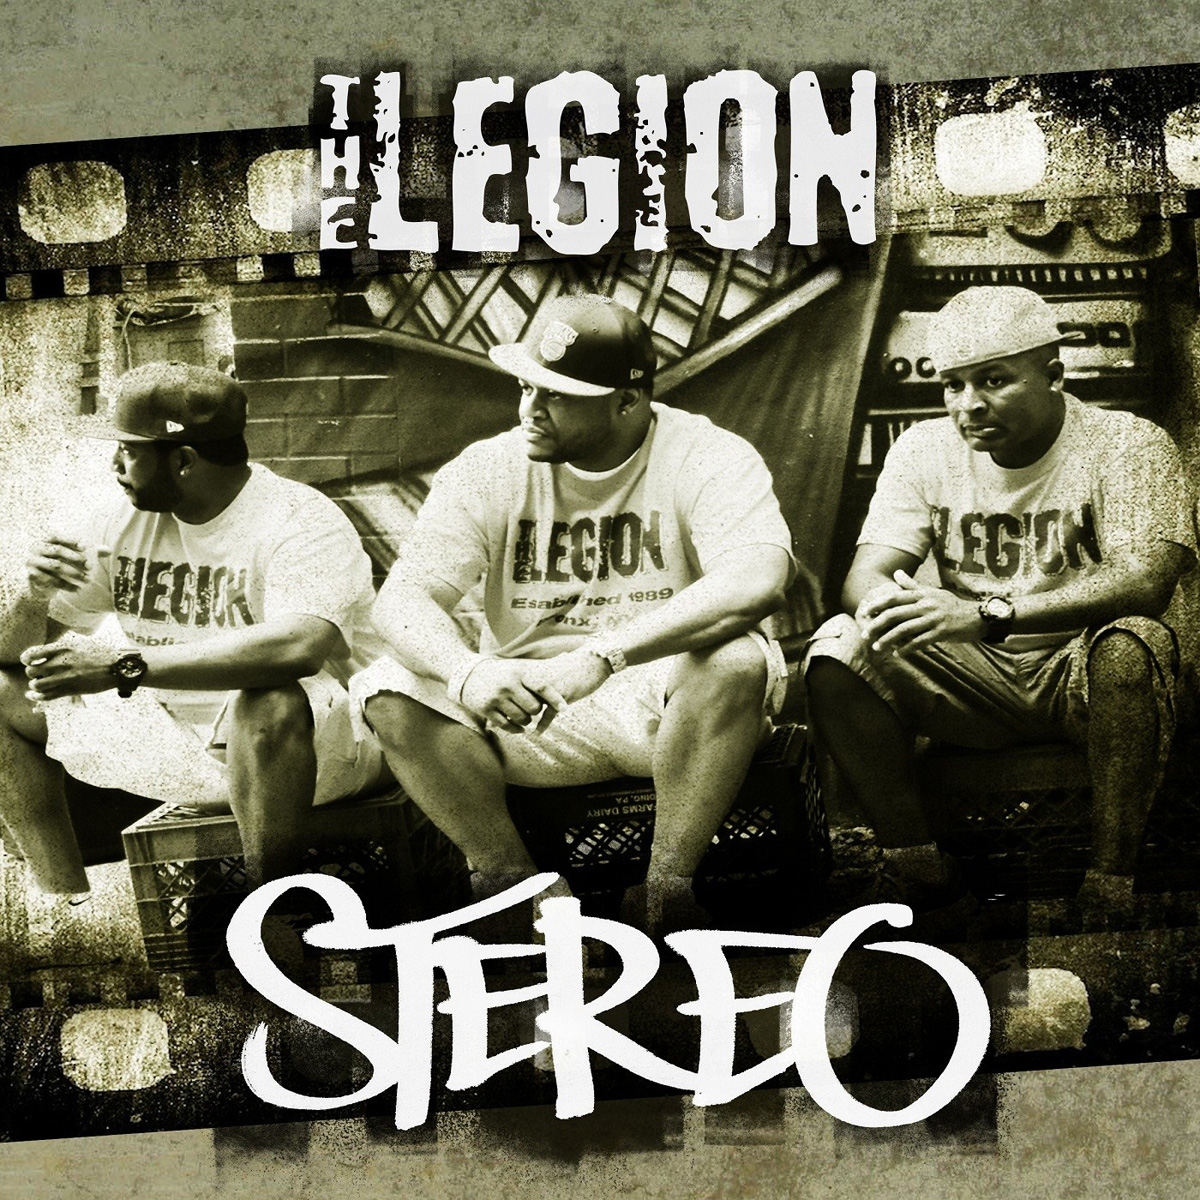 The Legion “Stereo” Prod by Buckwild via Ill Adrenaline Records